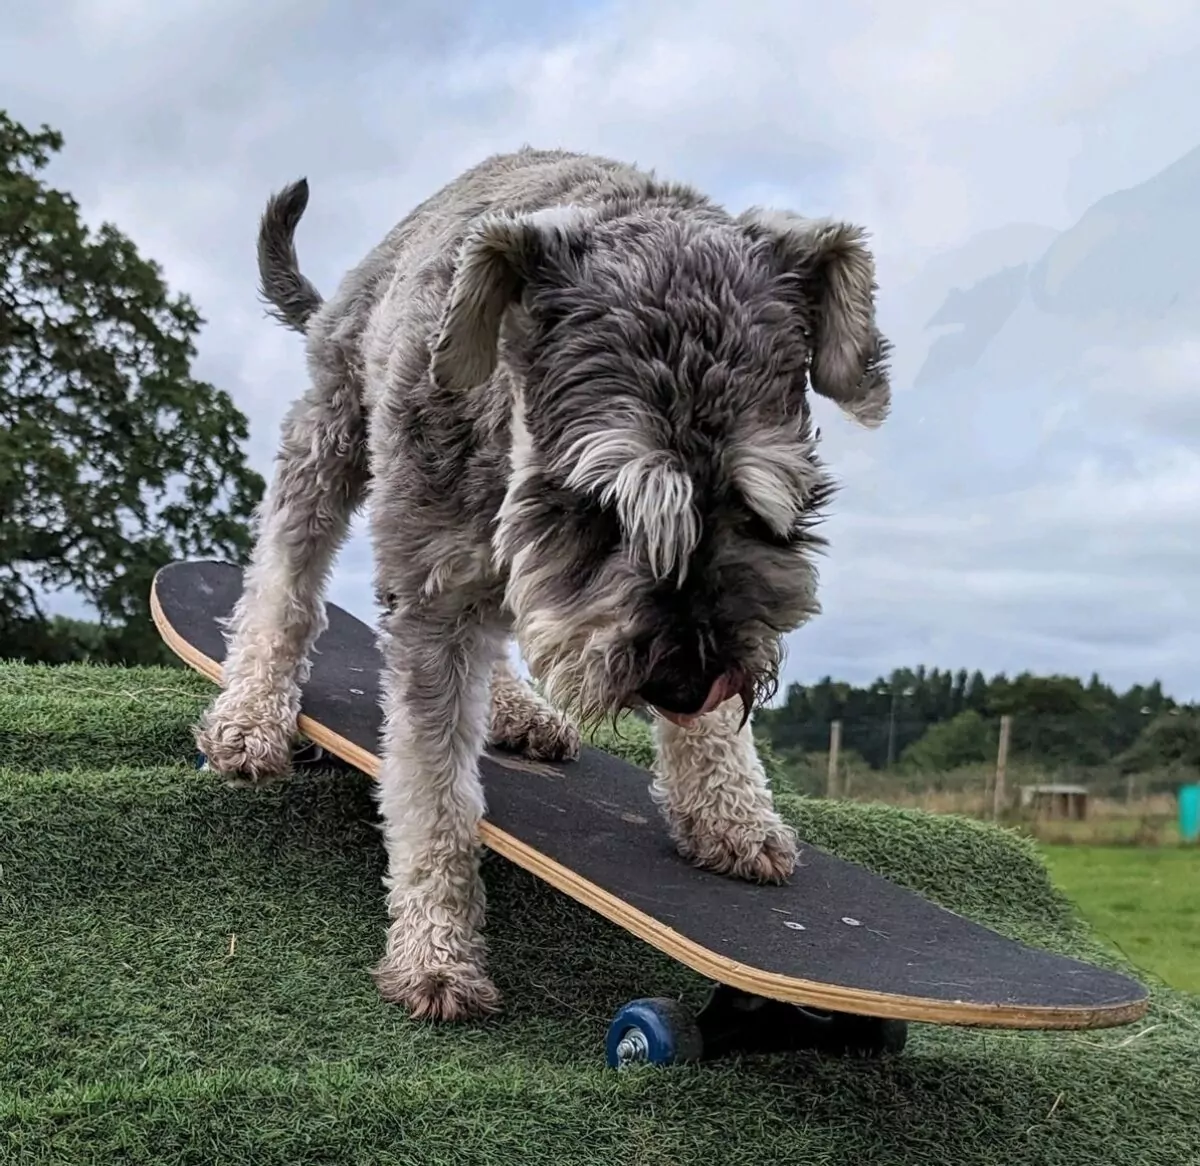 dog on a skateboard